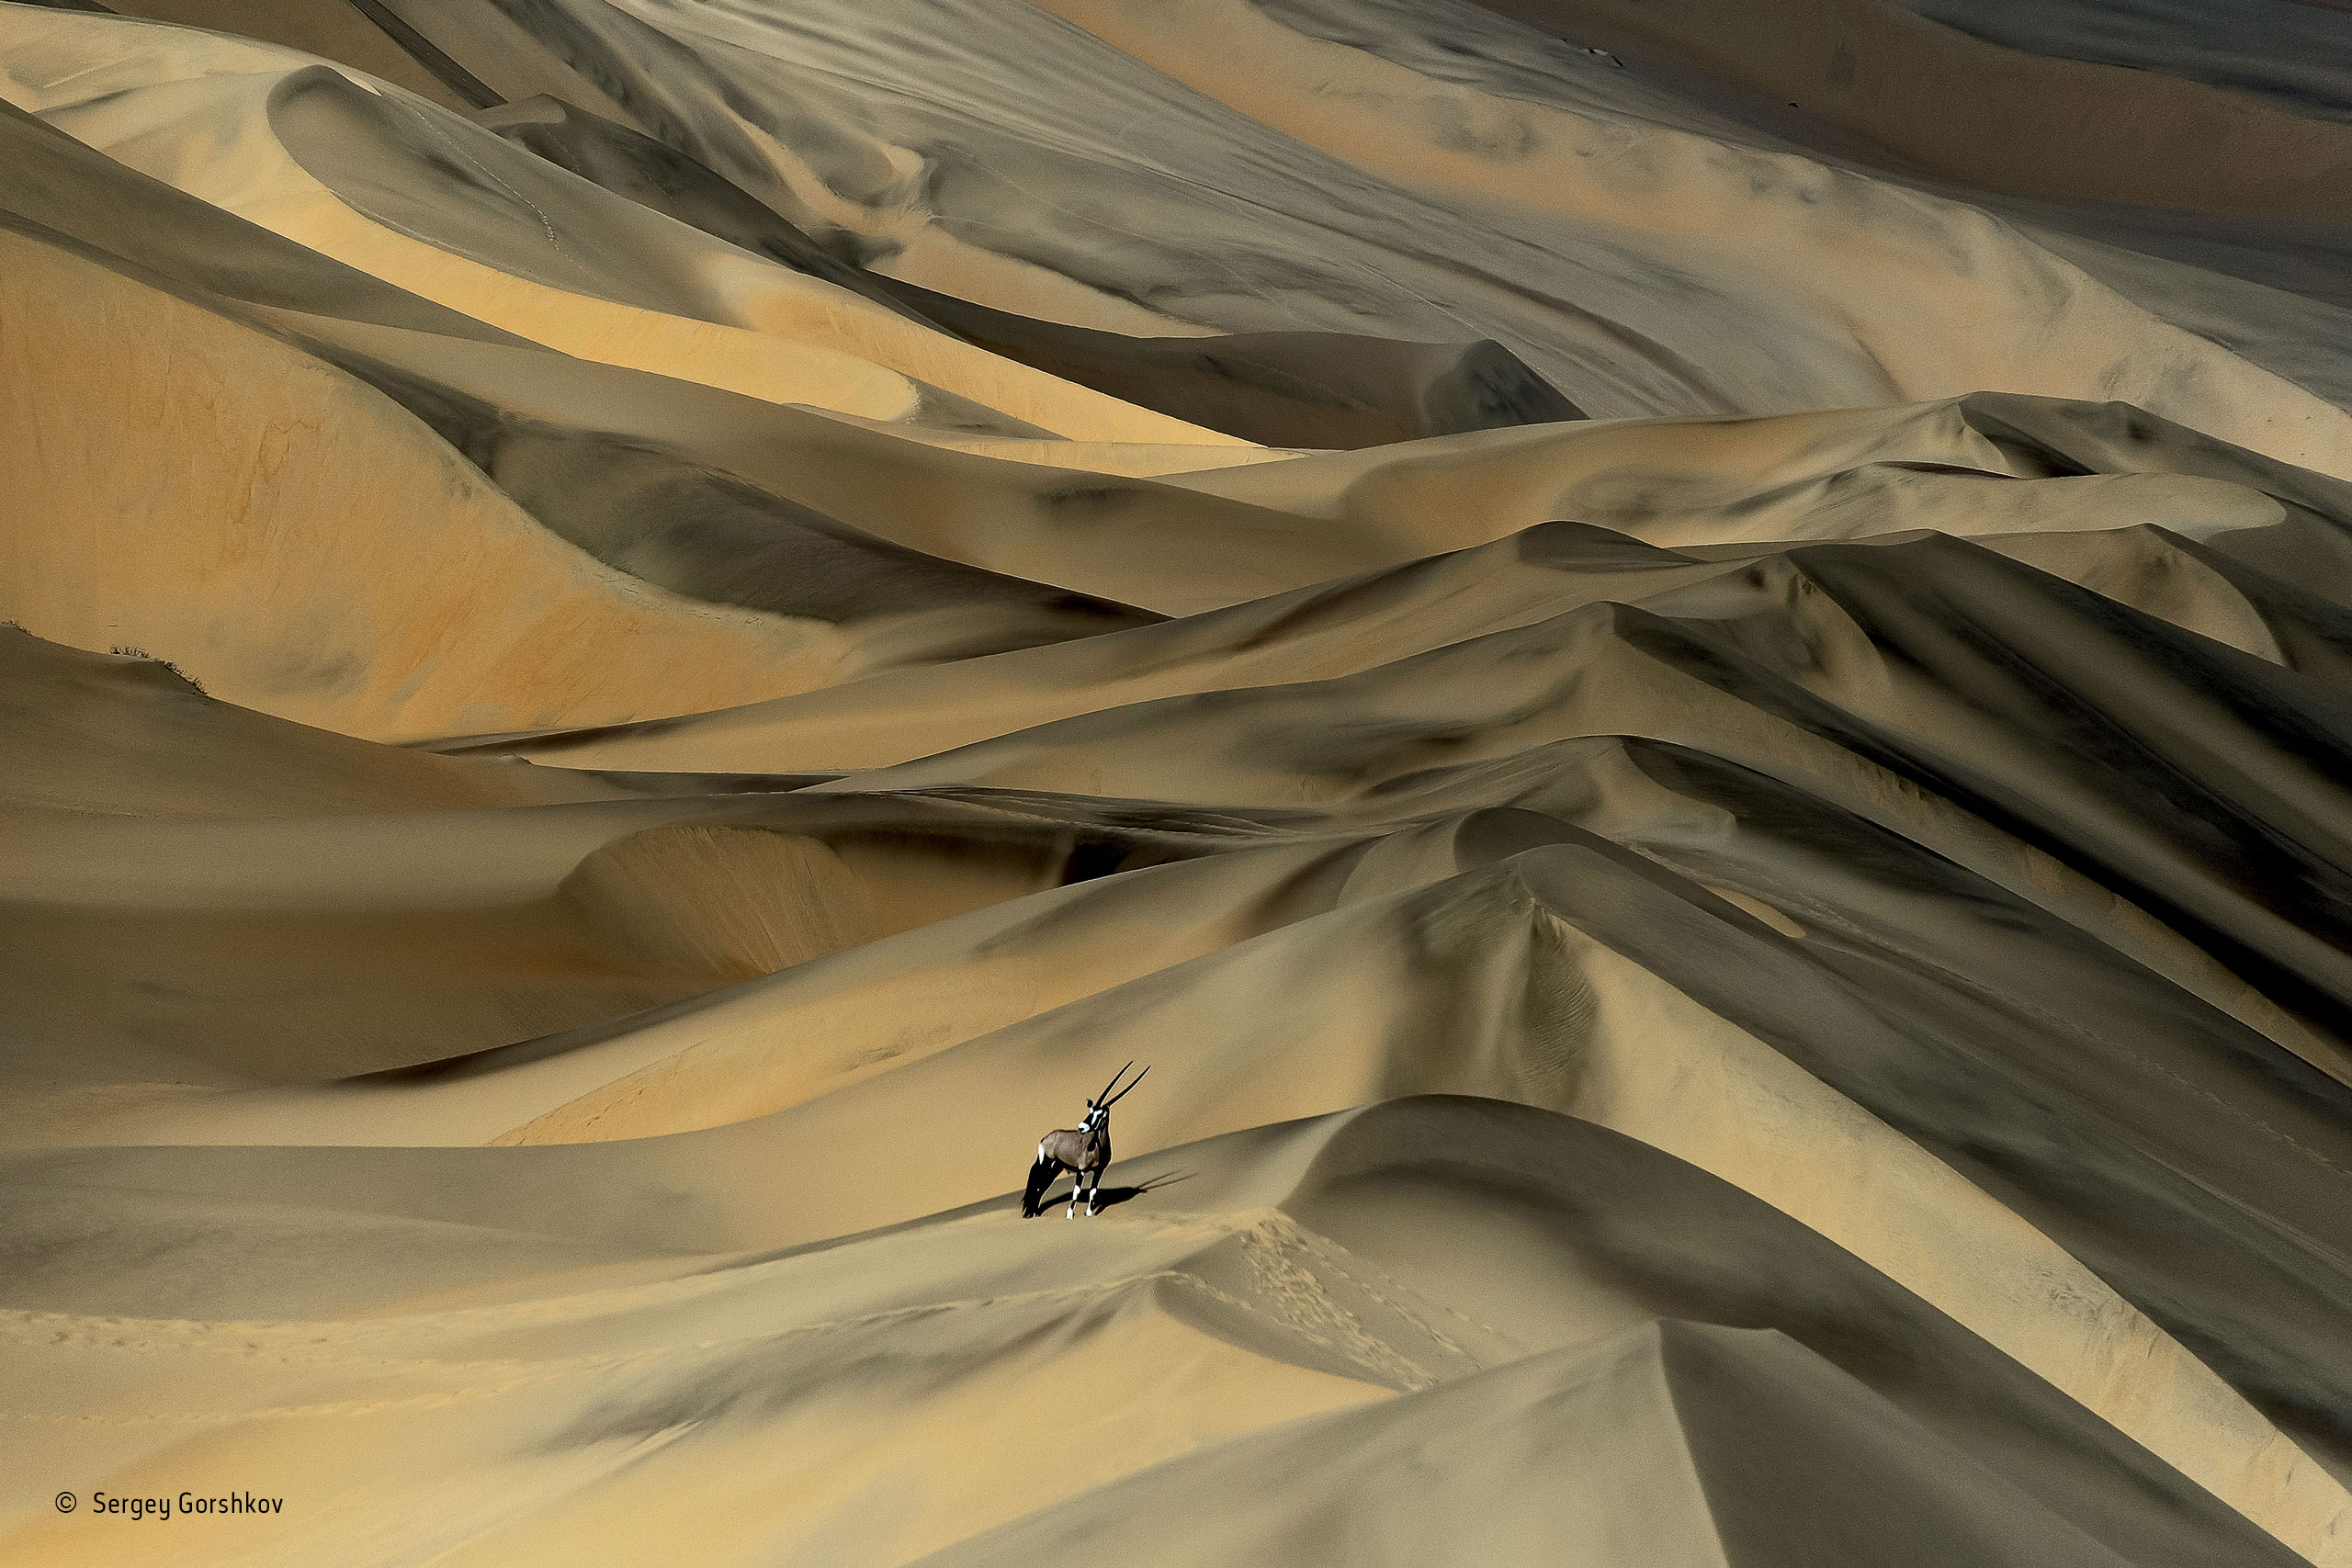 Desert survivor, by Sergey Gorshkov